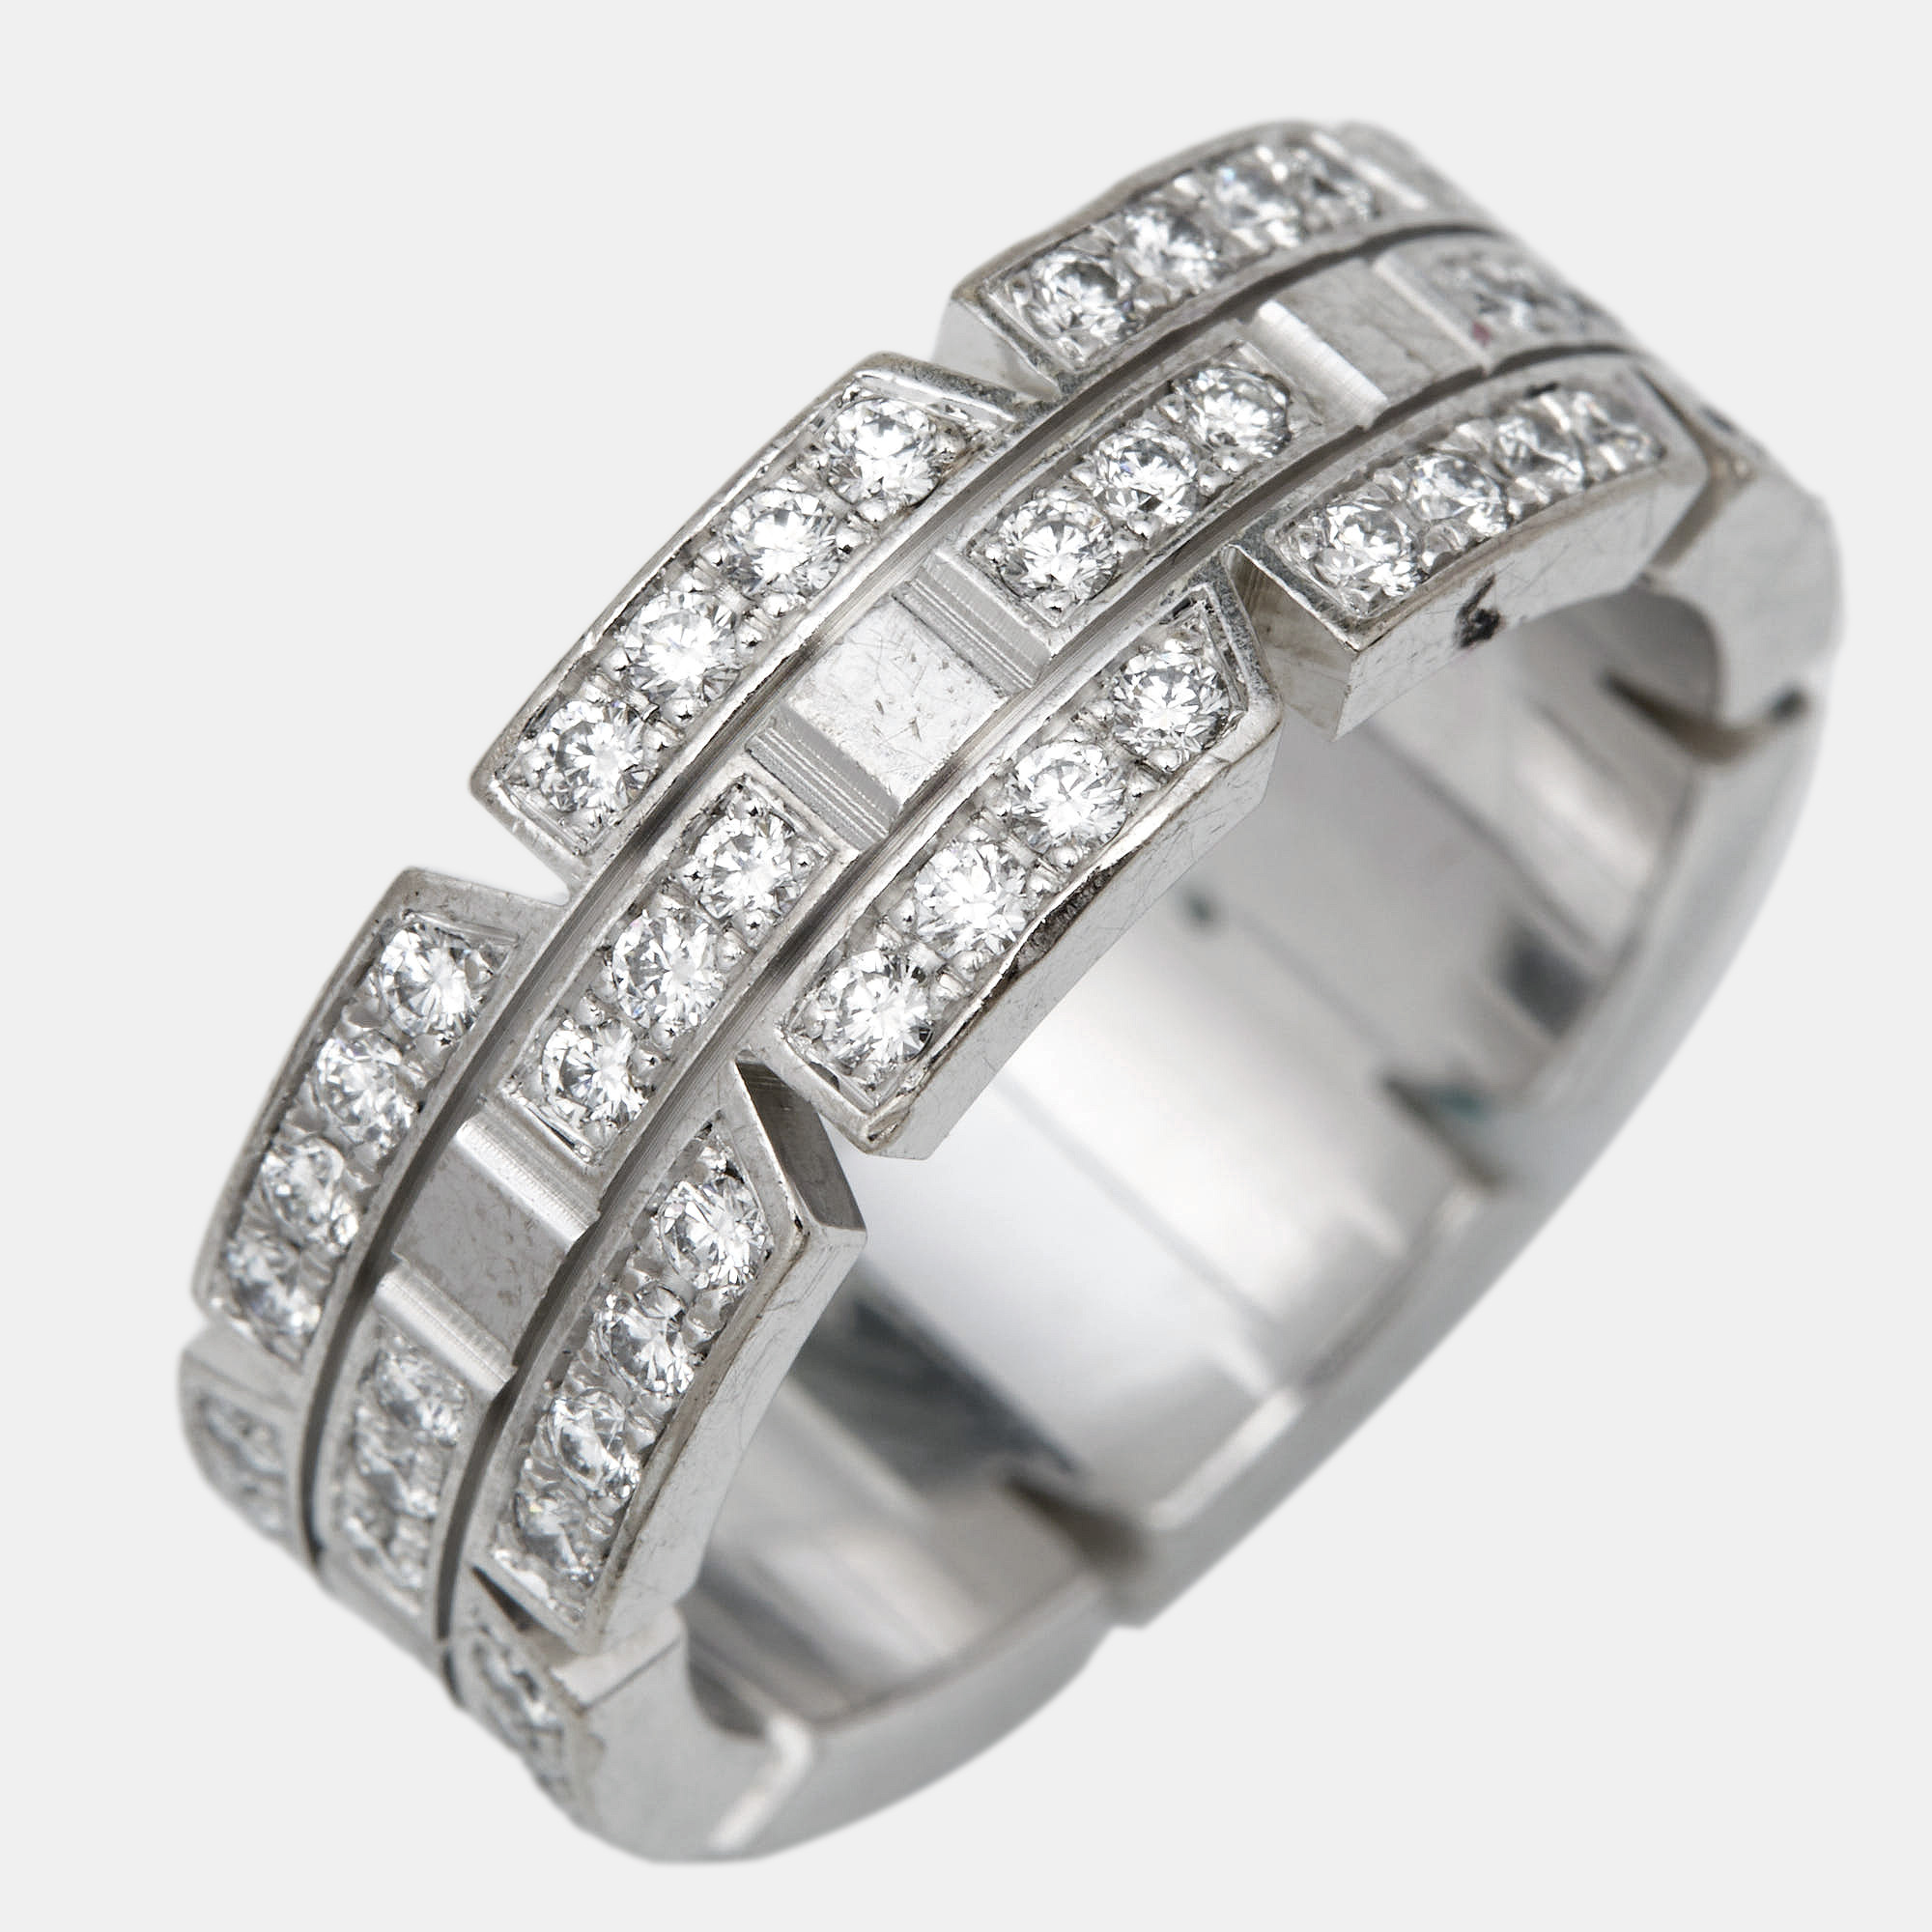 Cartier Mallion Panthere Diamonds 18k White Gold Ring Size 49